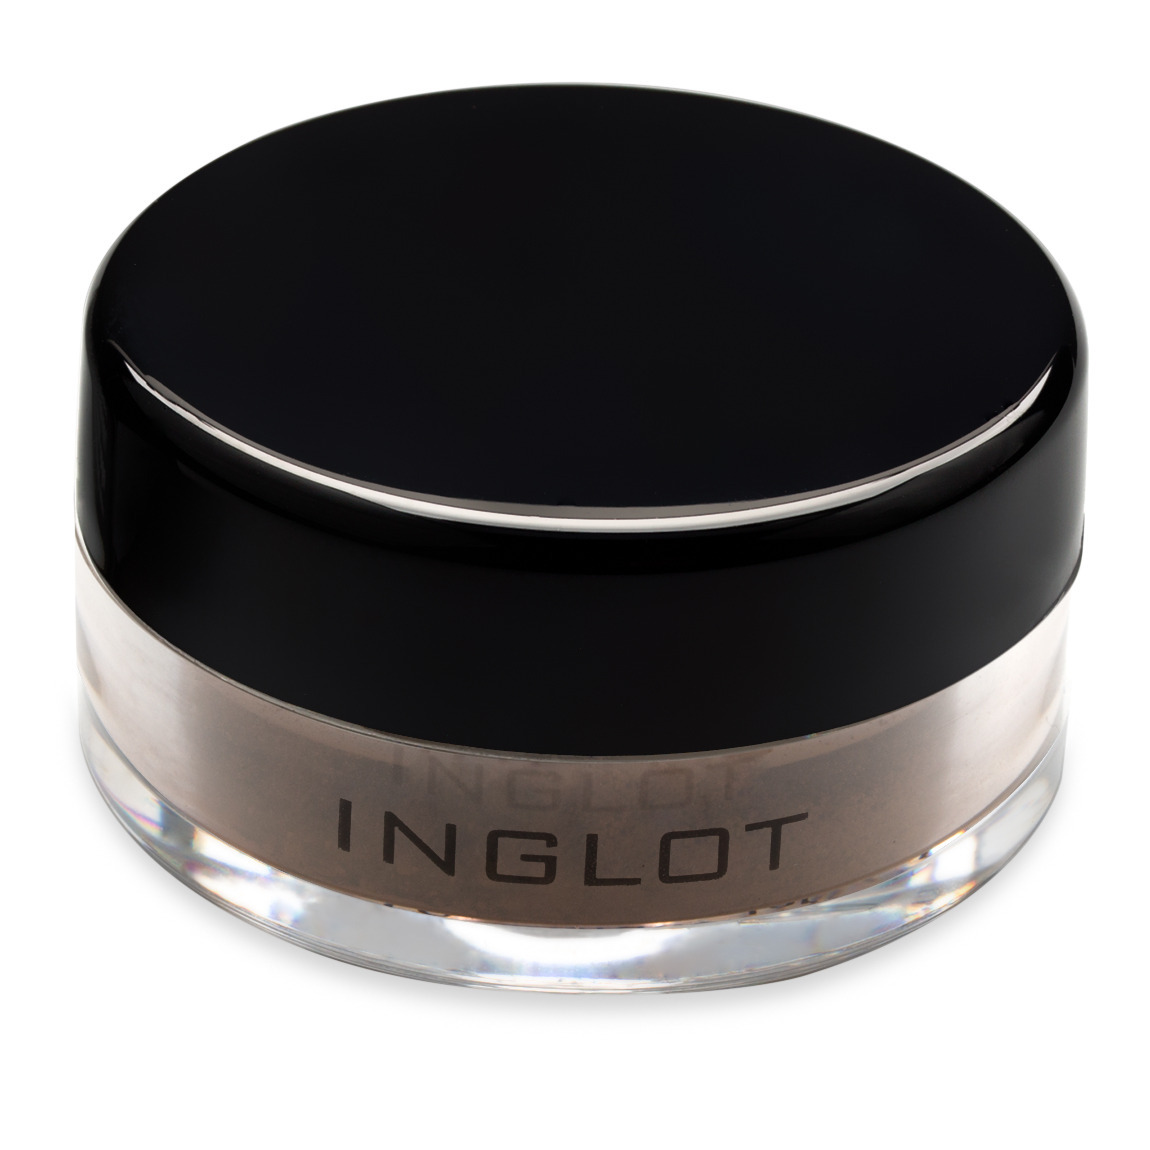 Inglot Cosmetics Translucent Loose Powder 214 alternative view 1.